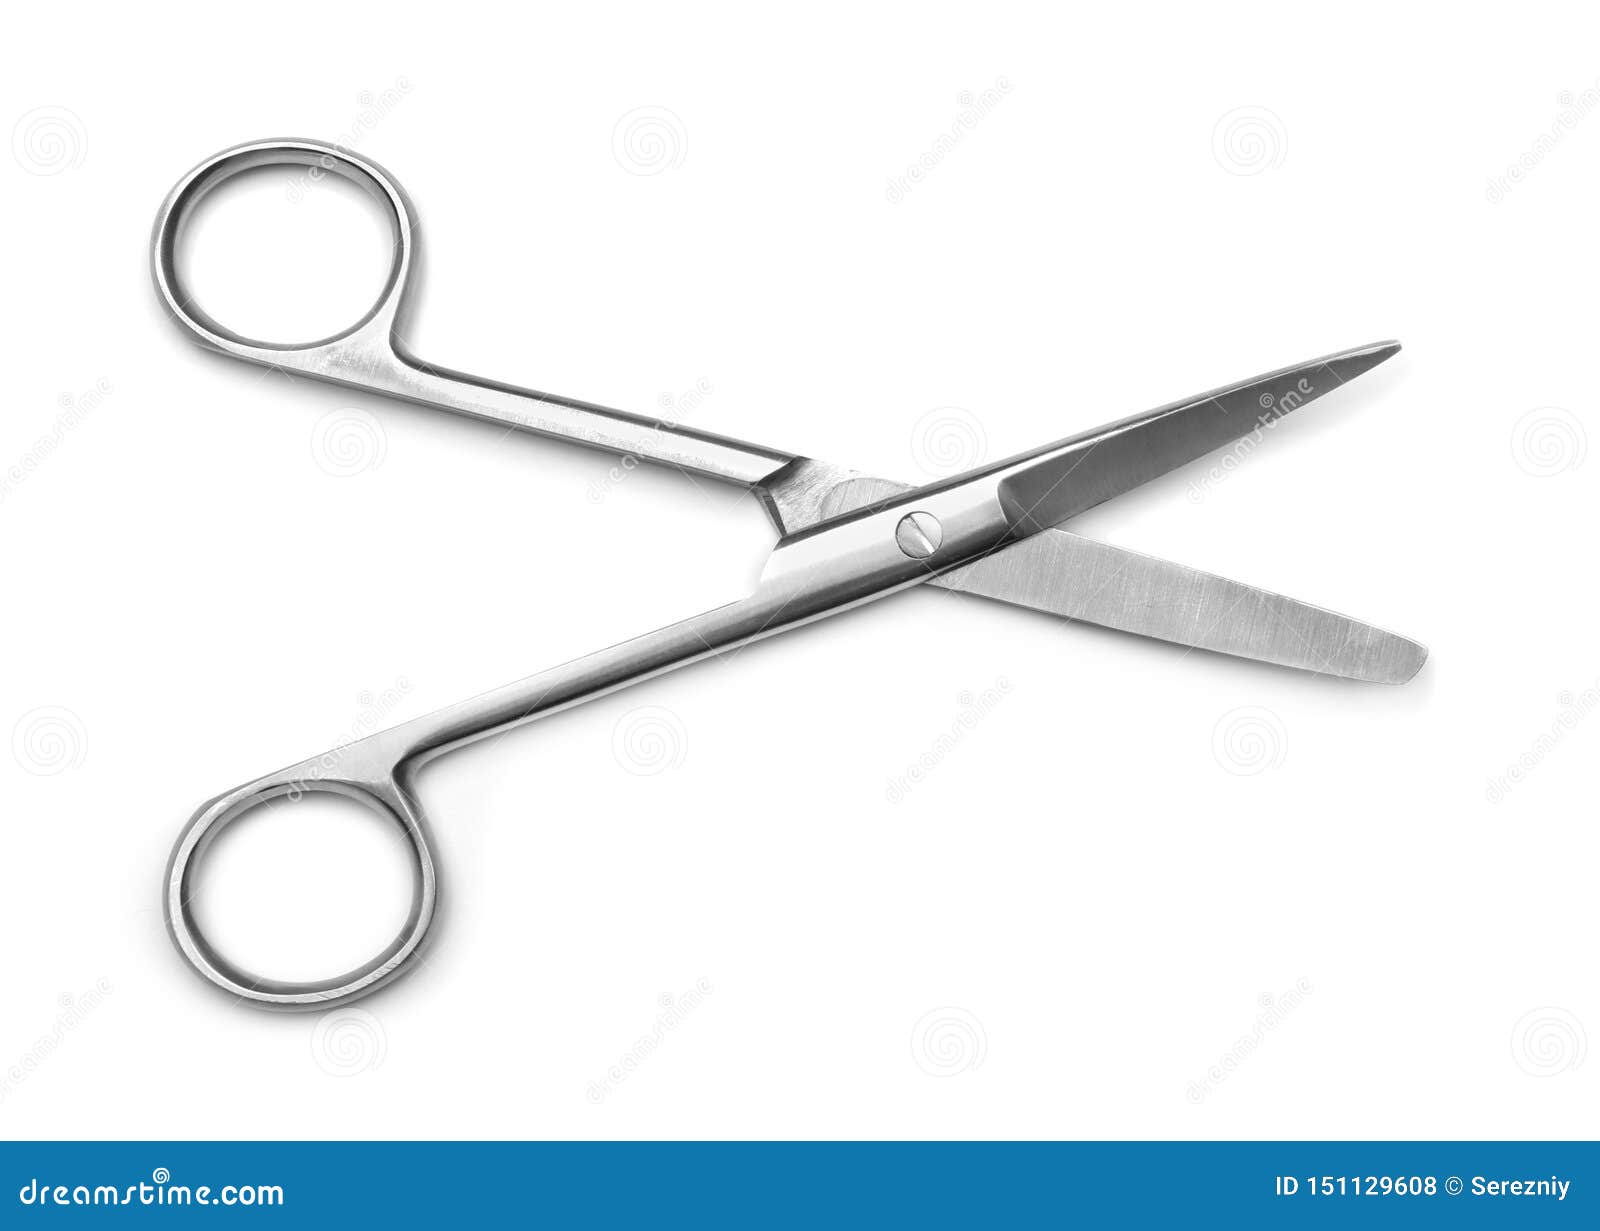 Dentist S Scissors on White Background Stock Photo - Image of steel ...